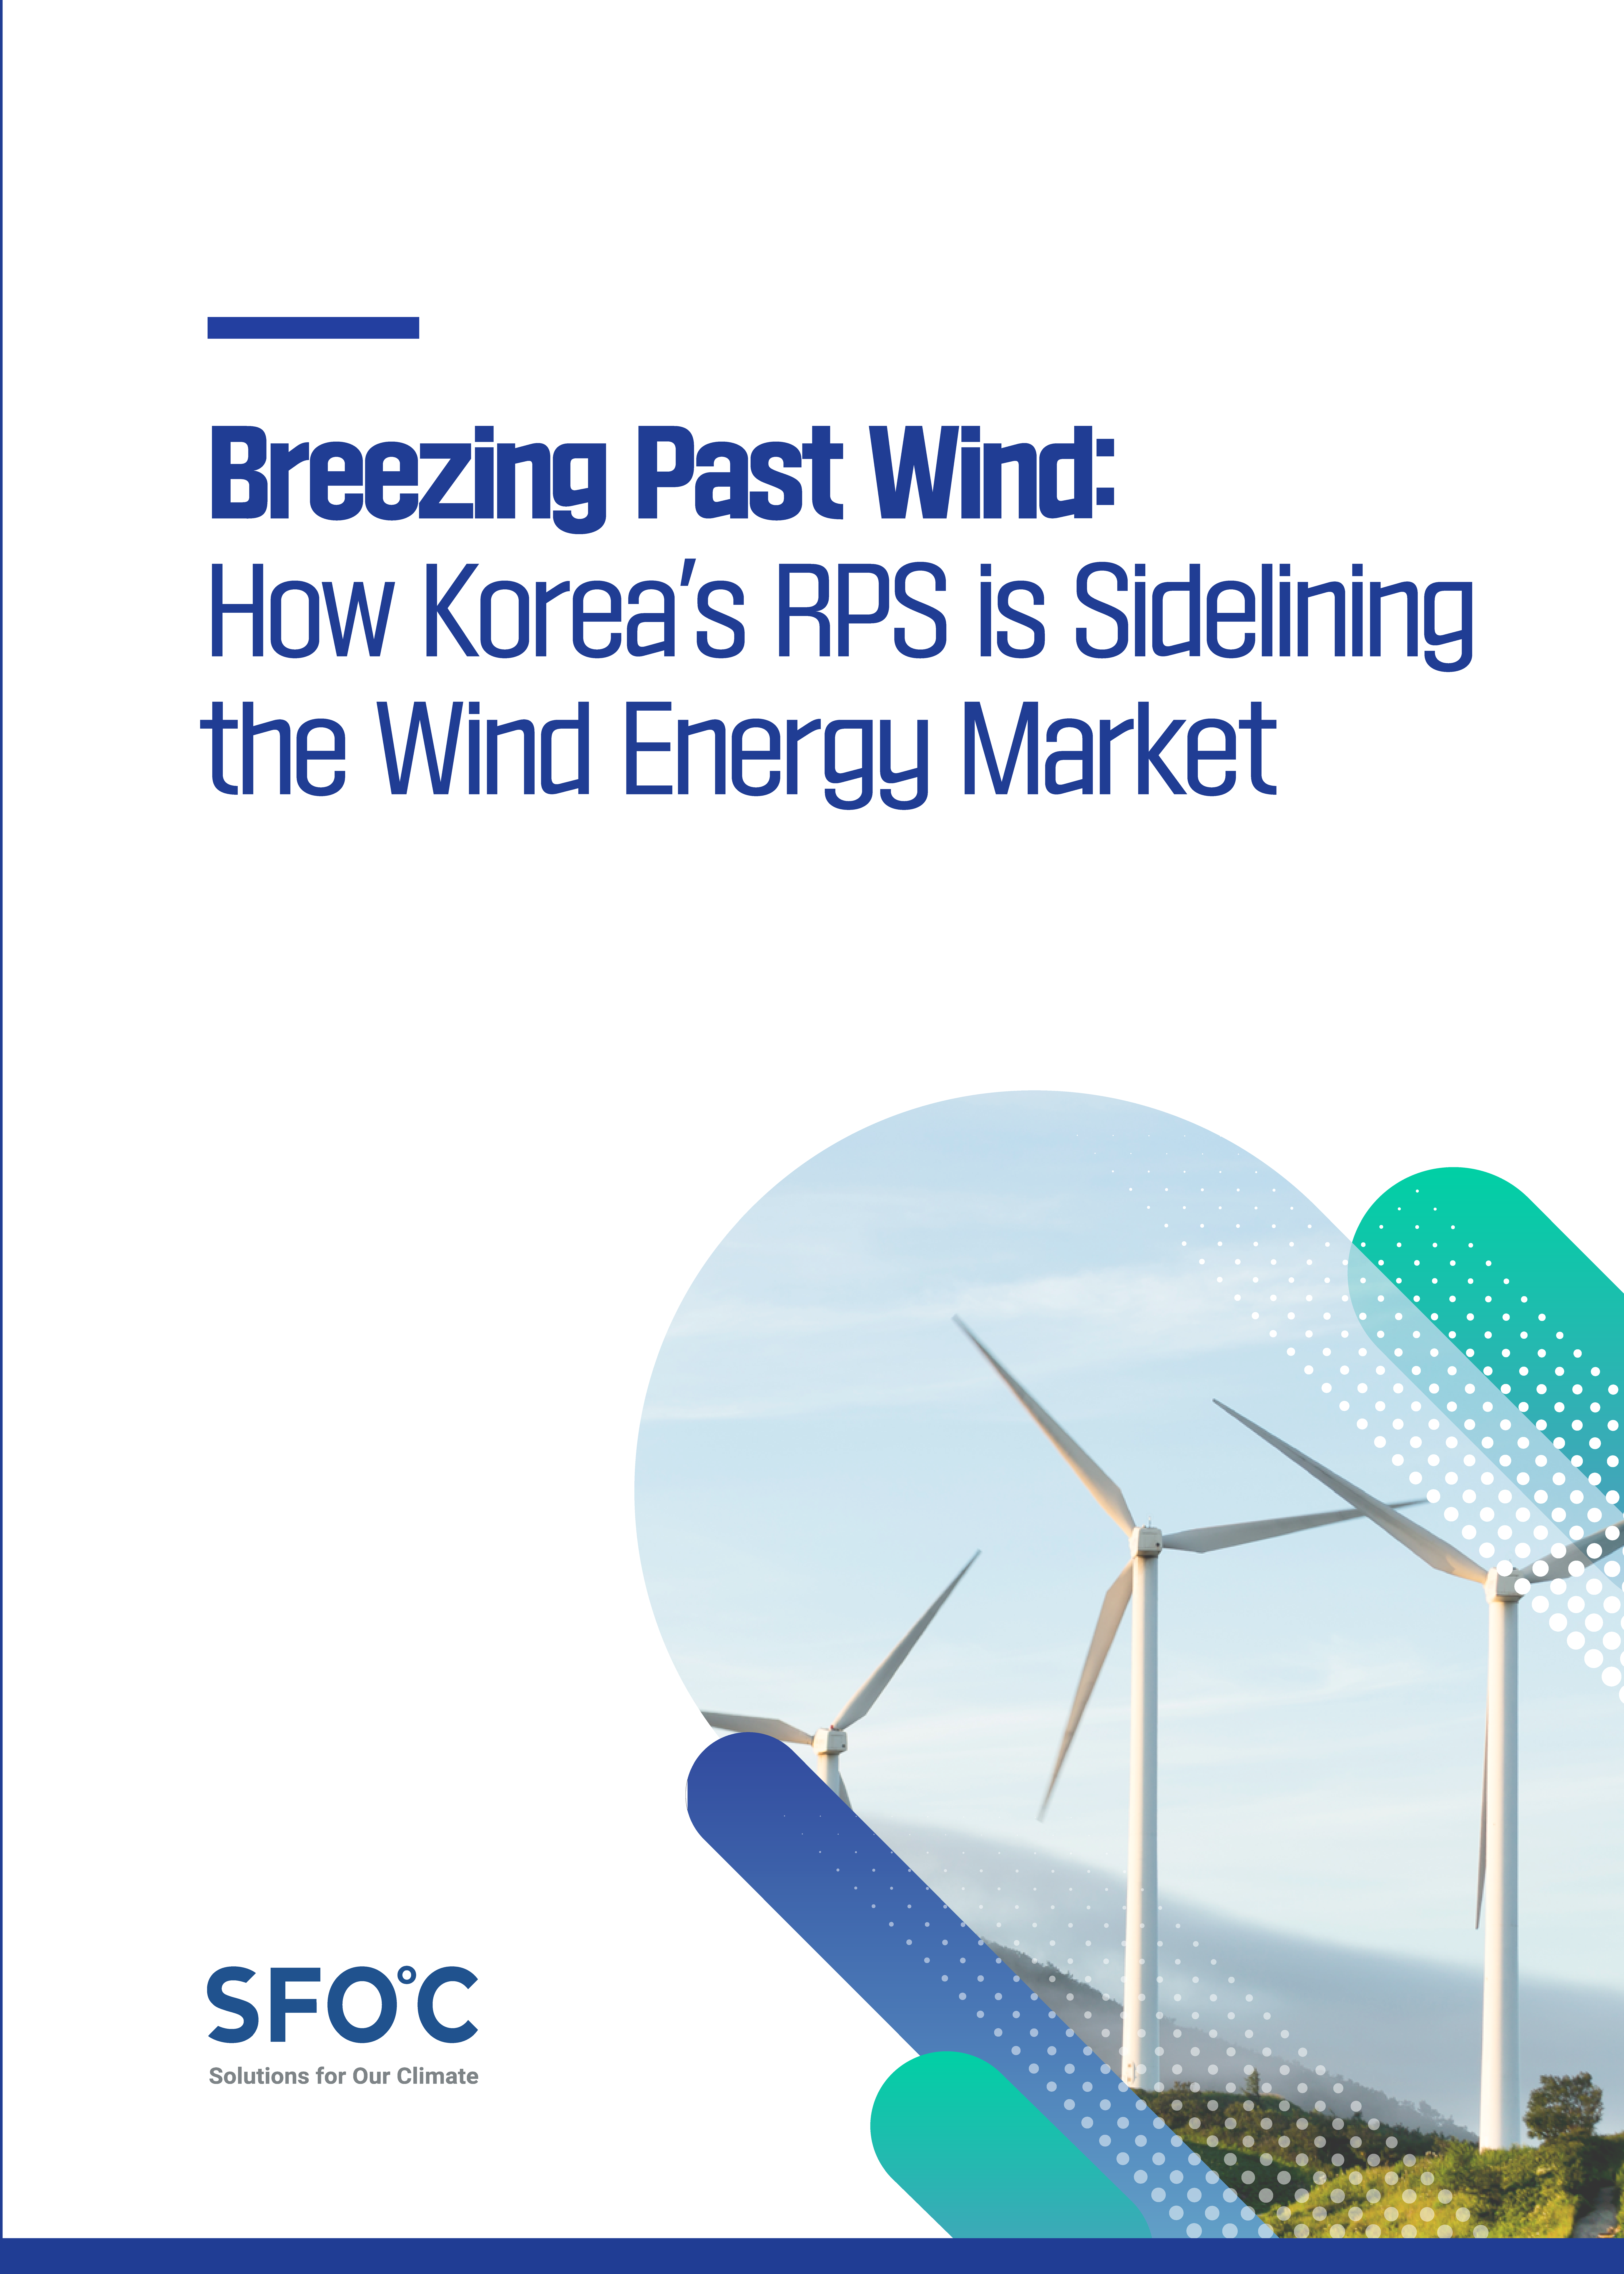 Breezing Past Wind: How Korea's RPS is Sidelining the Wind Energy Market